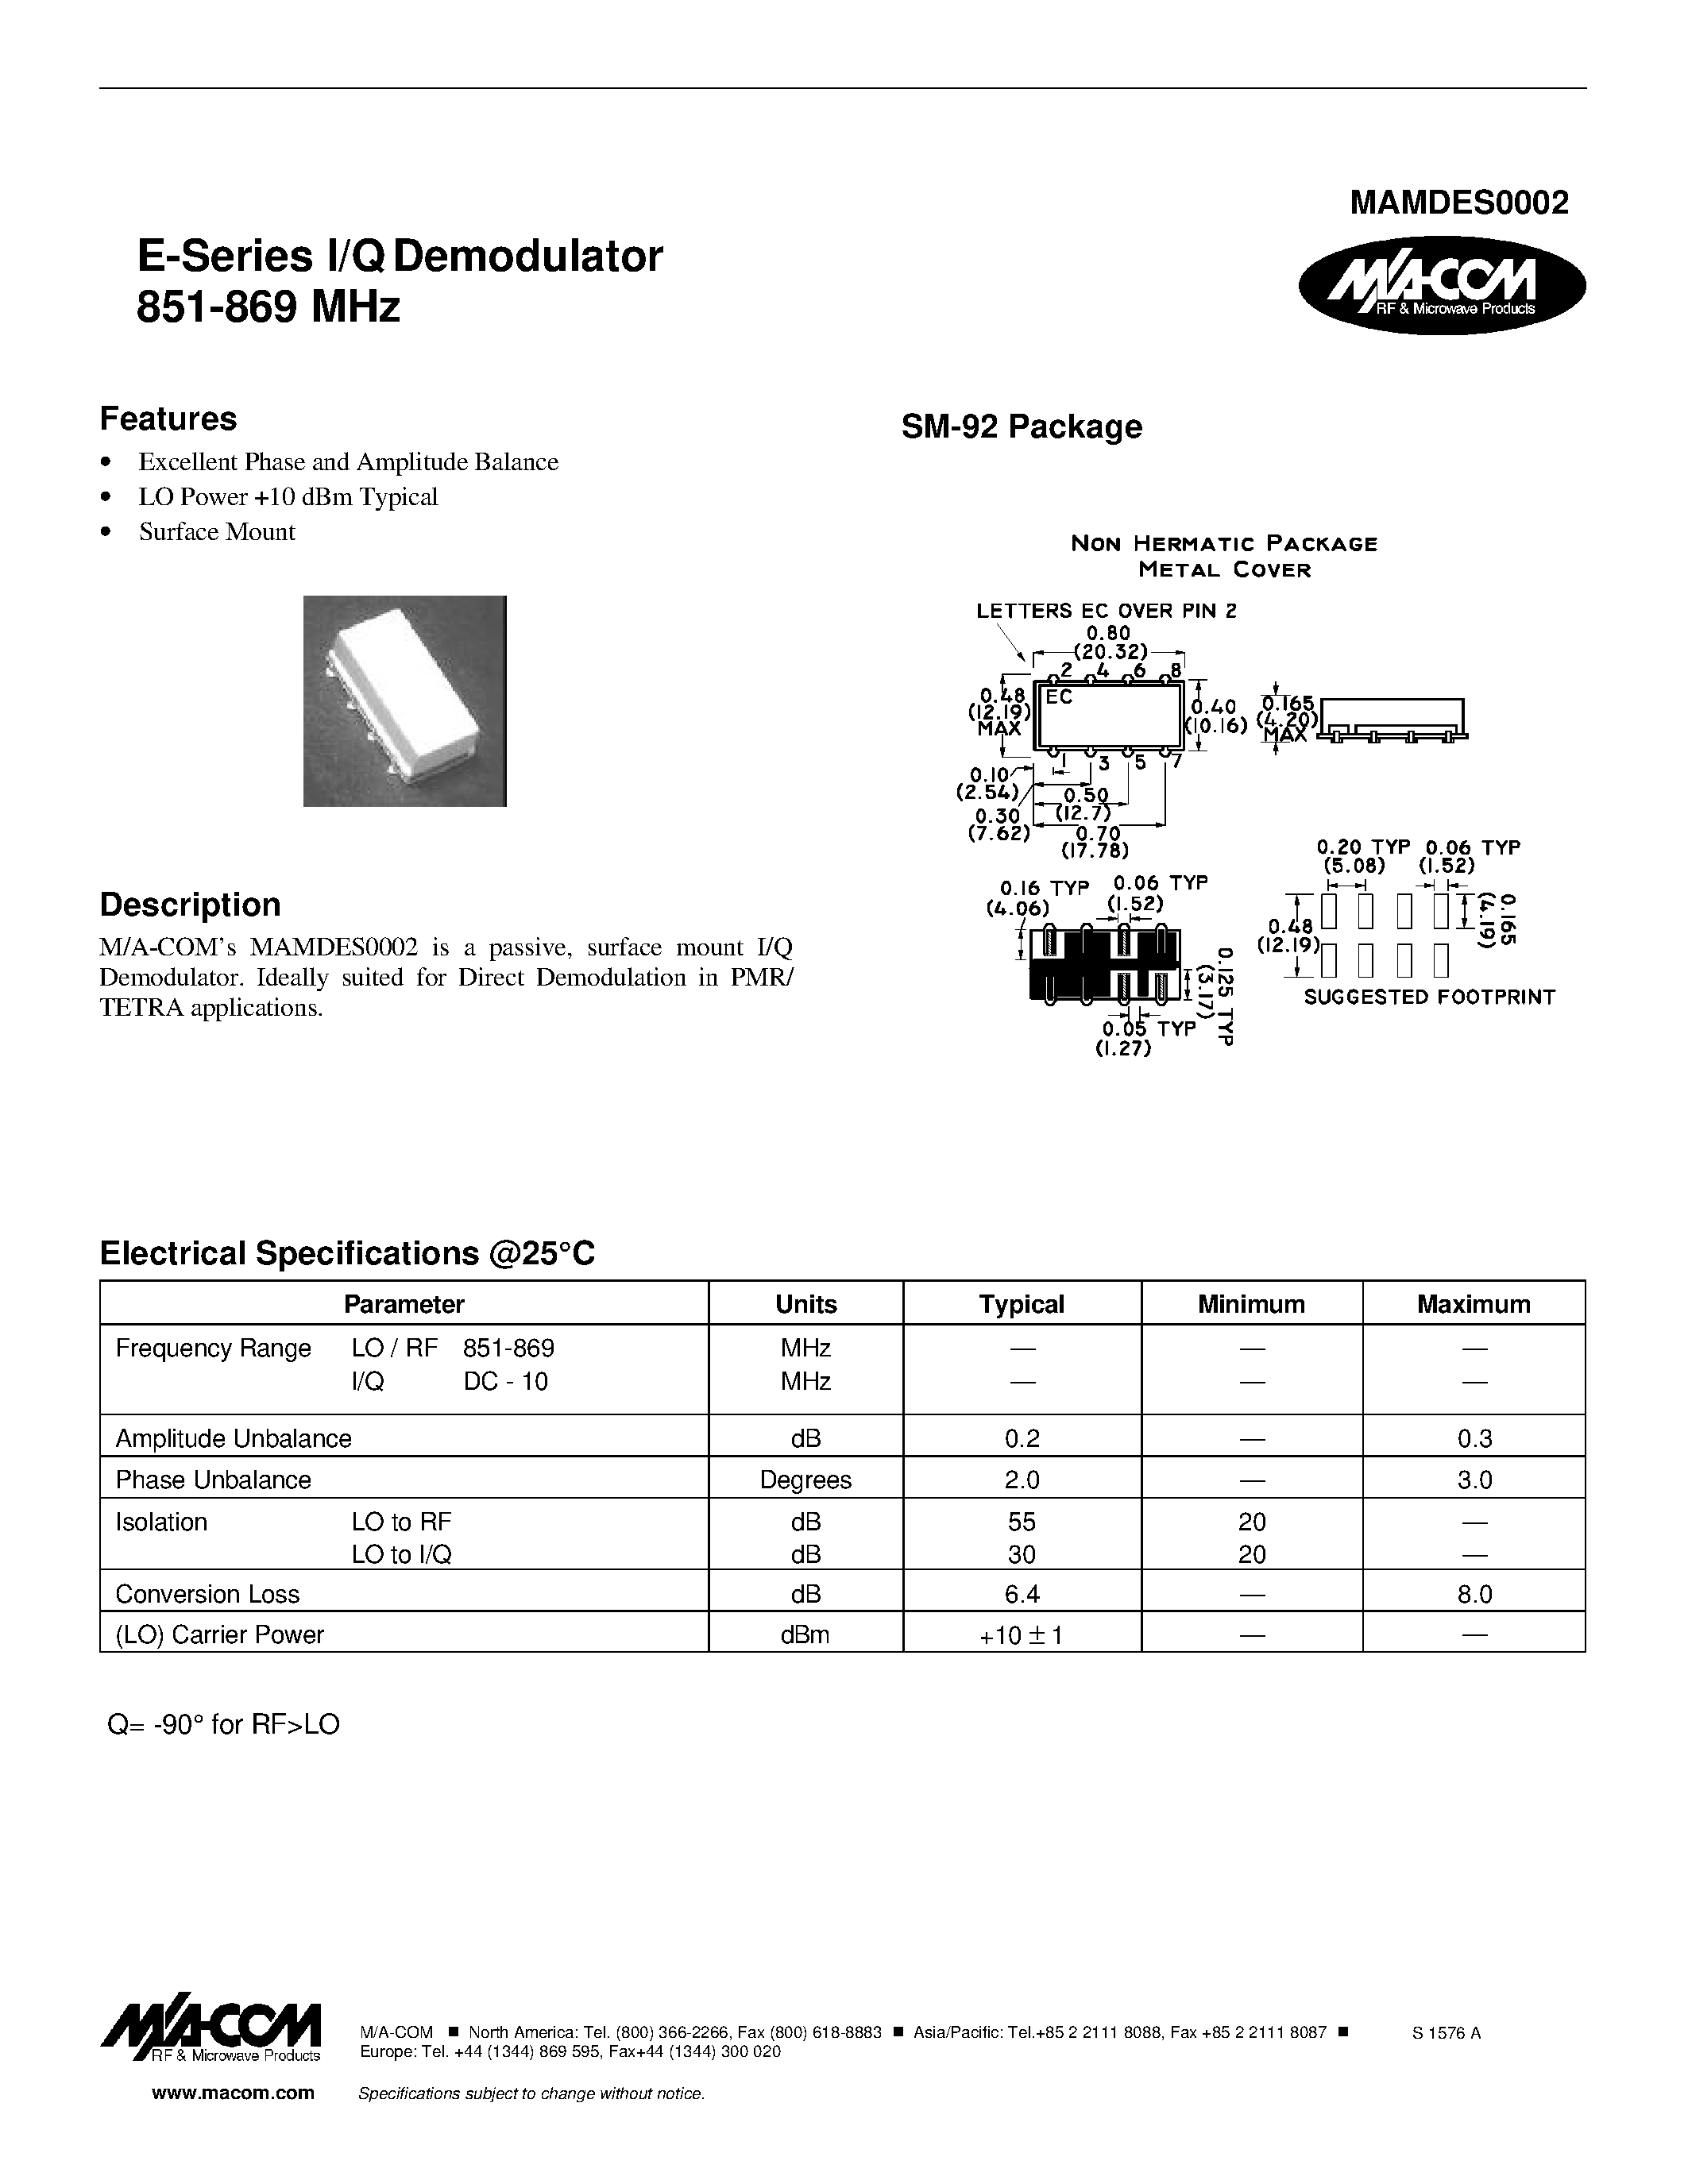 Datasheet MAMDES0002 - E-Series I/Q Demodulator 851-869 MHz page 1